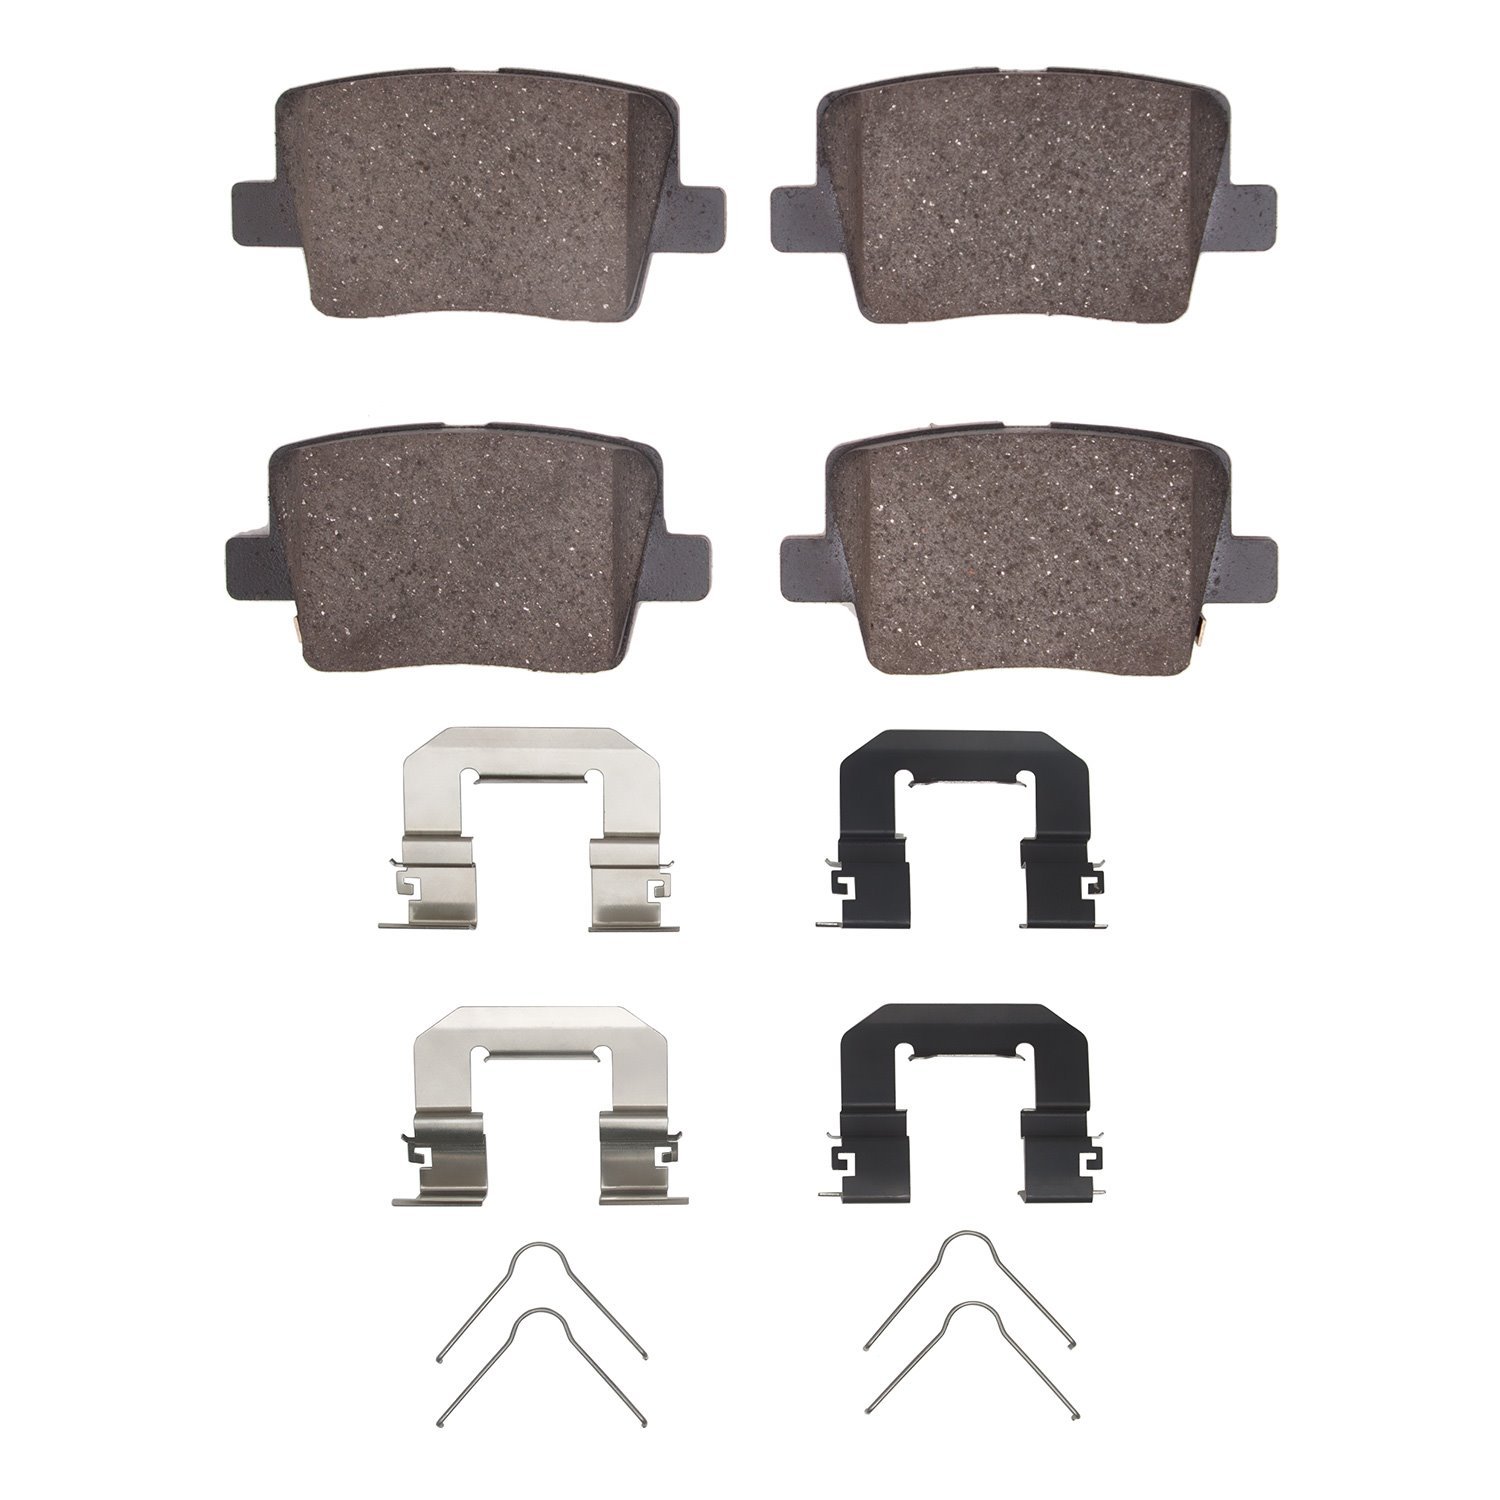 1310-2203-01 3000-Series Ceramic Brake Pads & Hardware Kit, Fits Select Kia/Hyundai/Genesis, Position: Rear